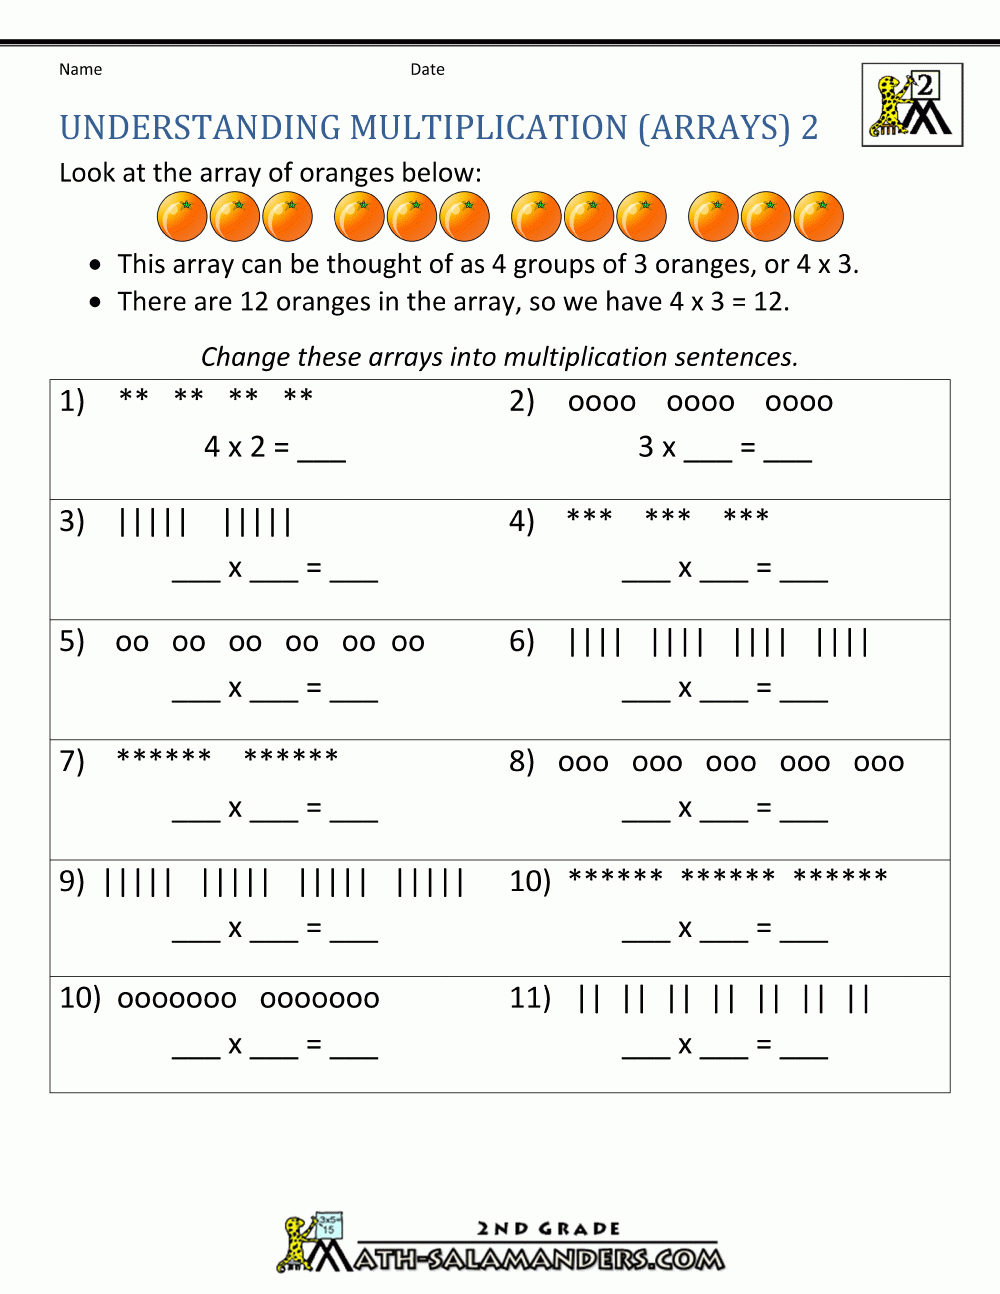 multiplication-worksheets-for-grade-2-pdf-the-multiplication-table